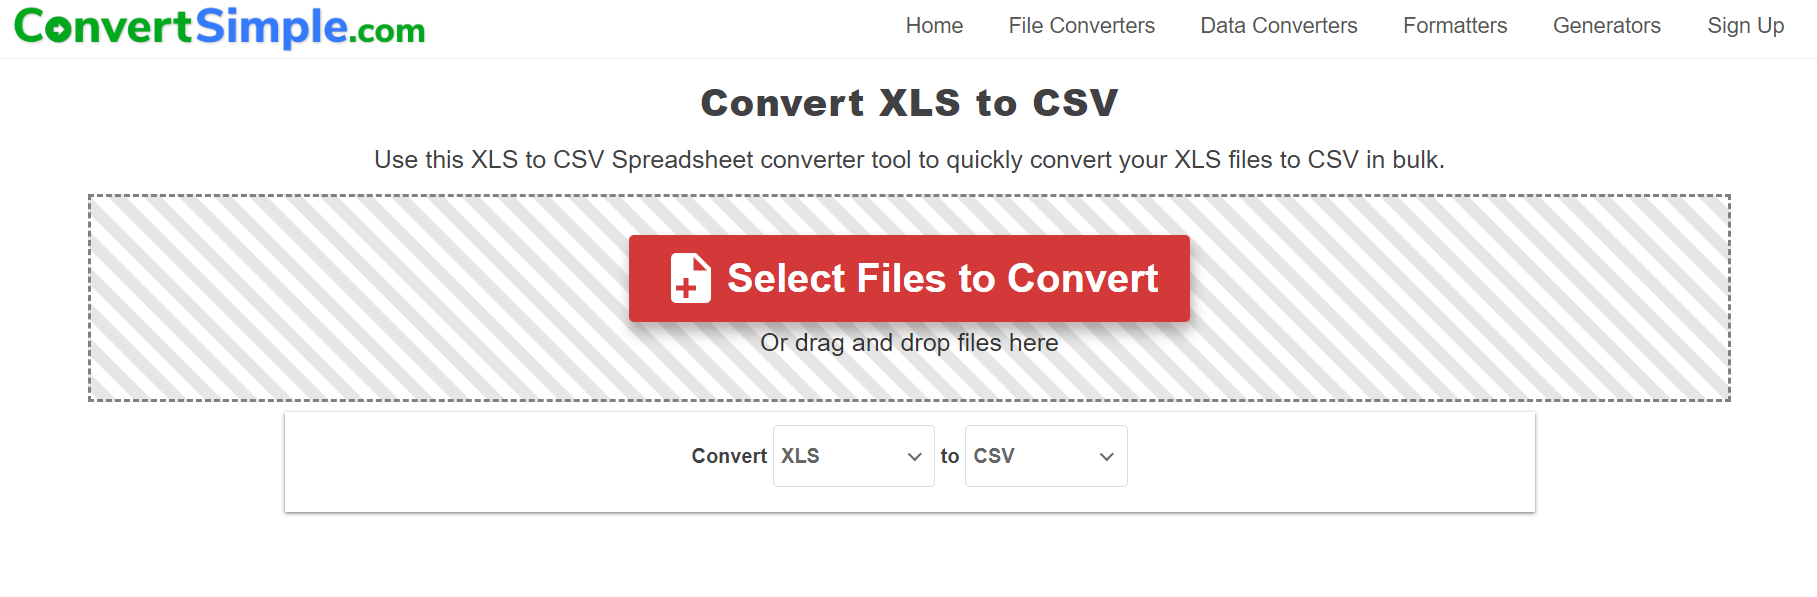 ConvertSimple Excel to CSV